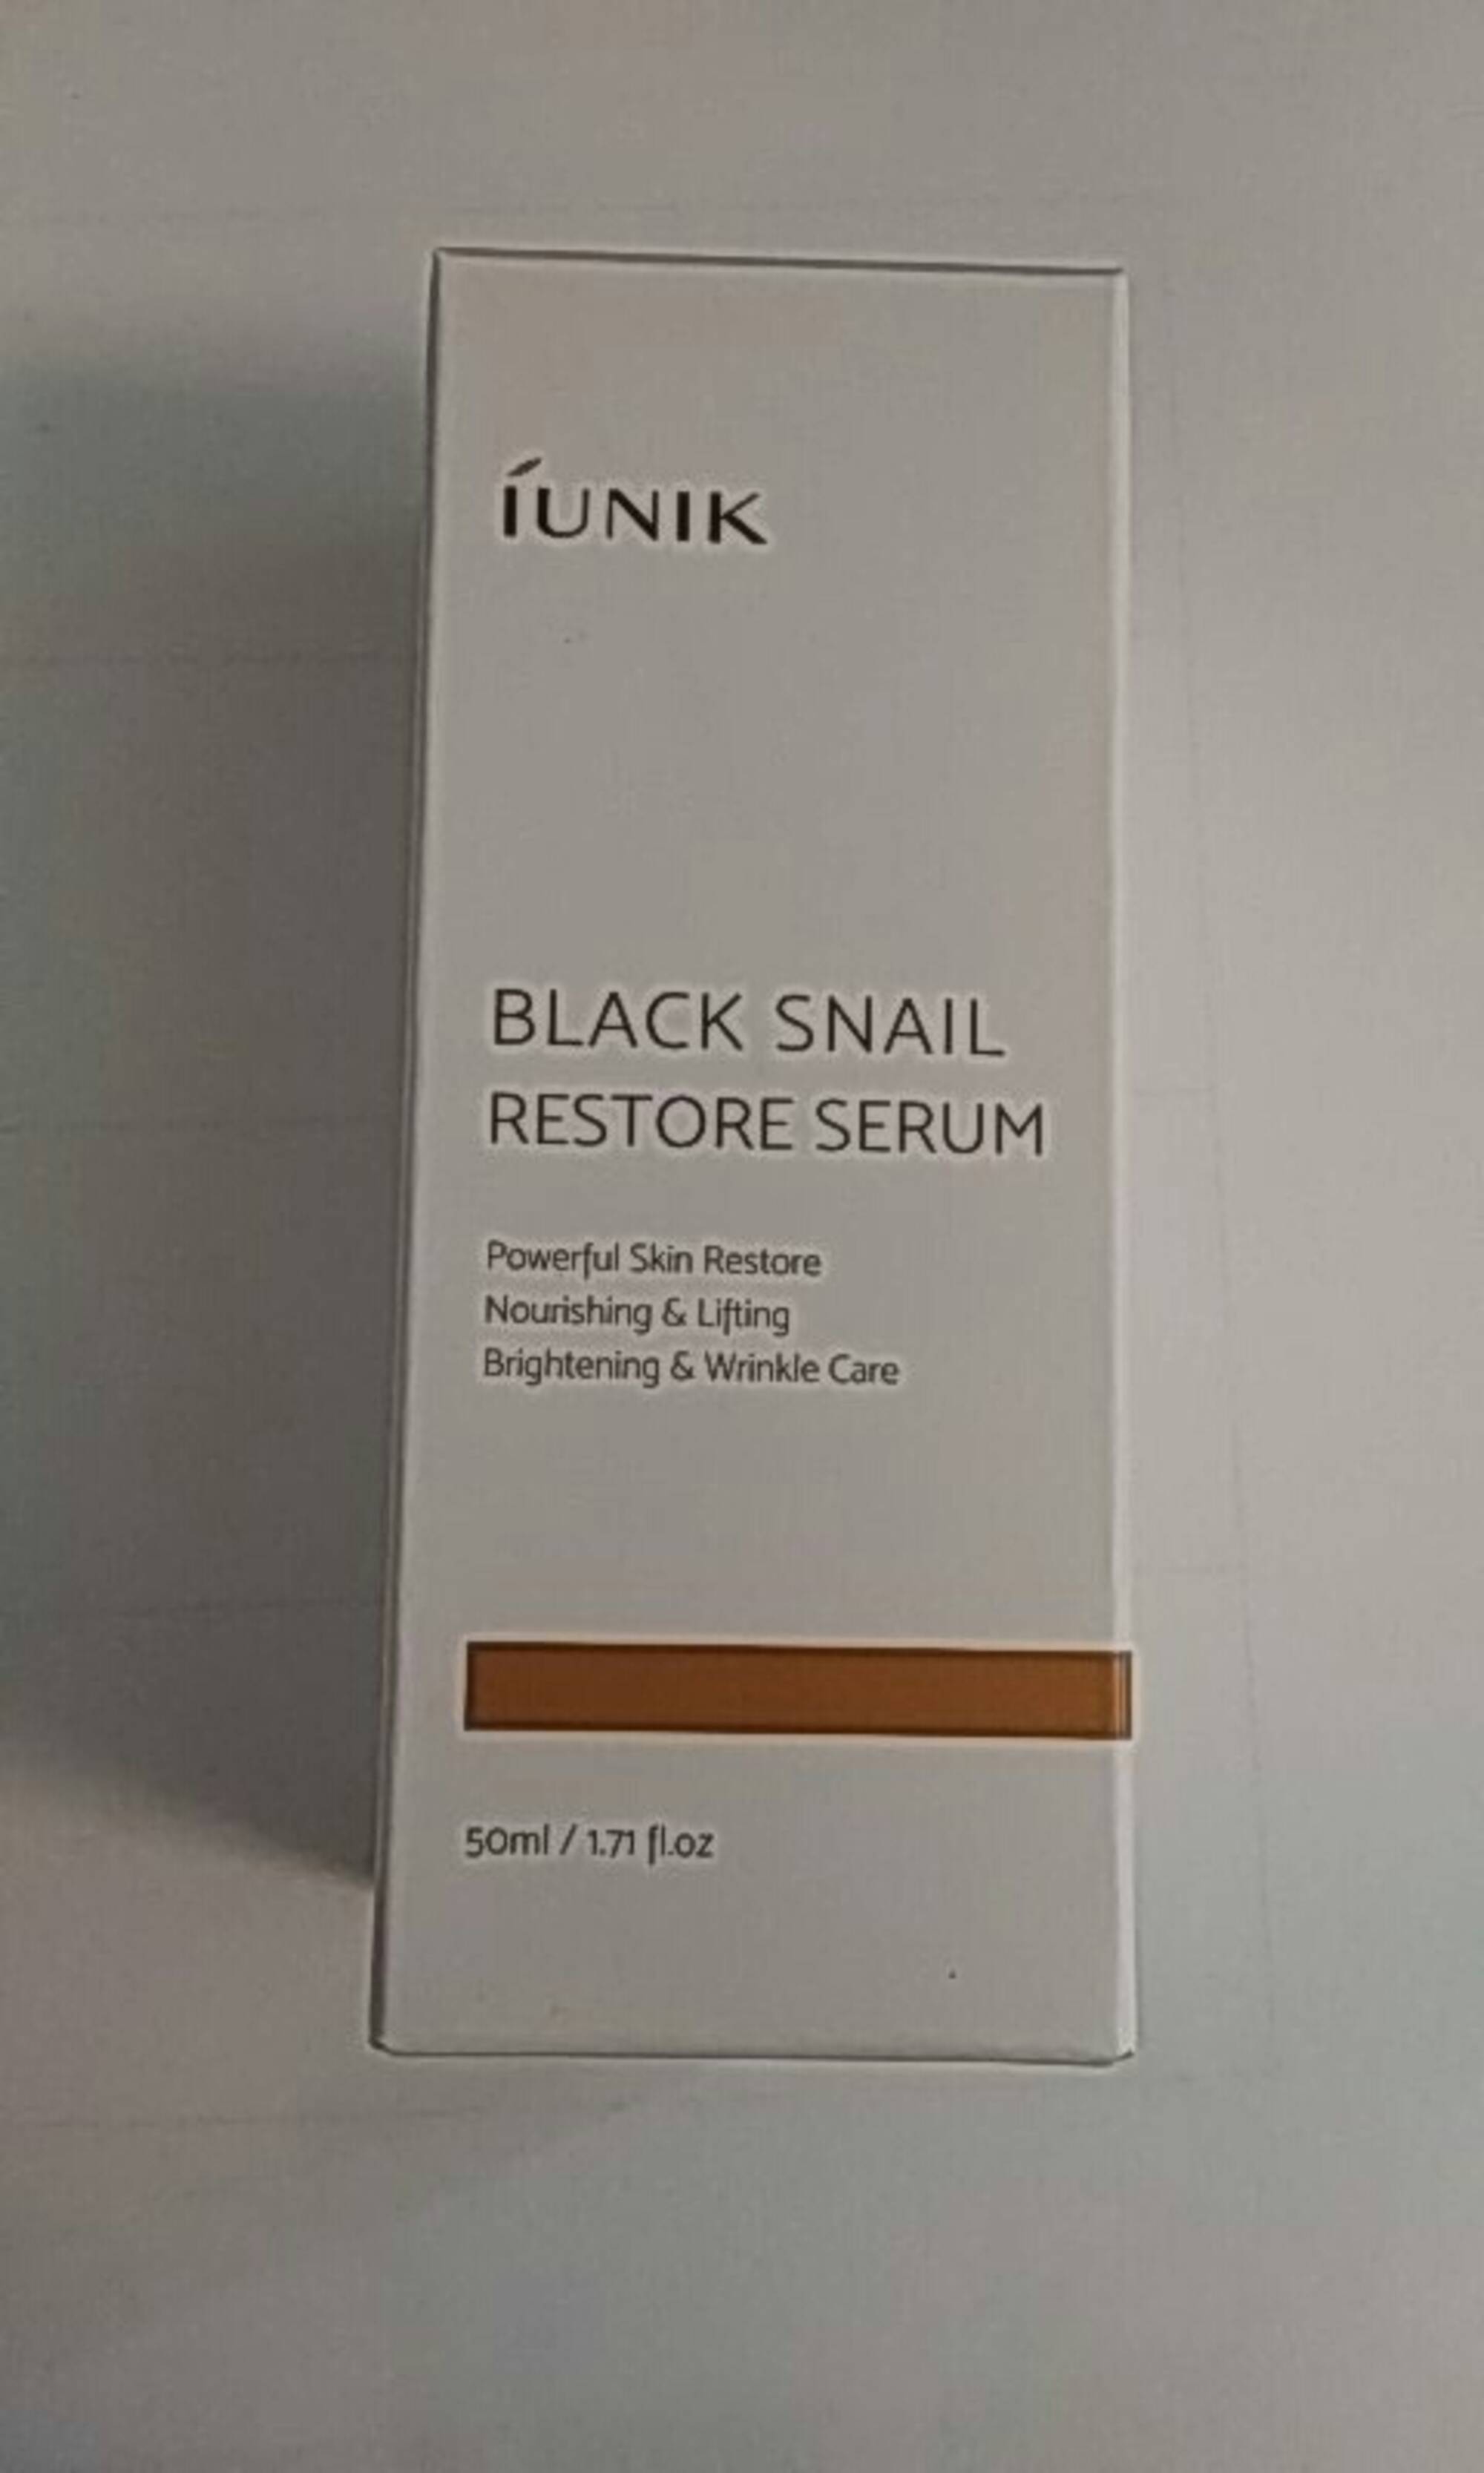 IUNIK - Black snail - Restore serum